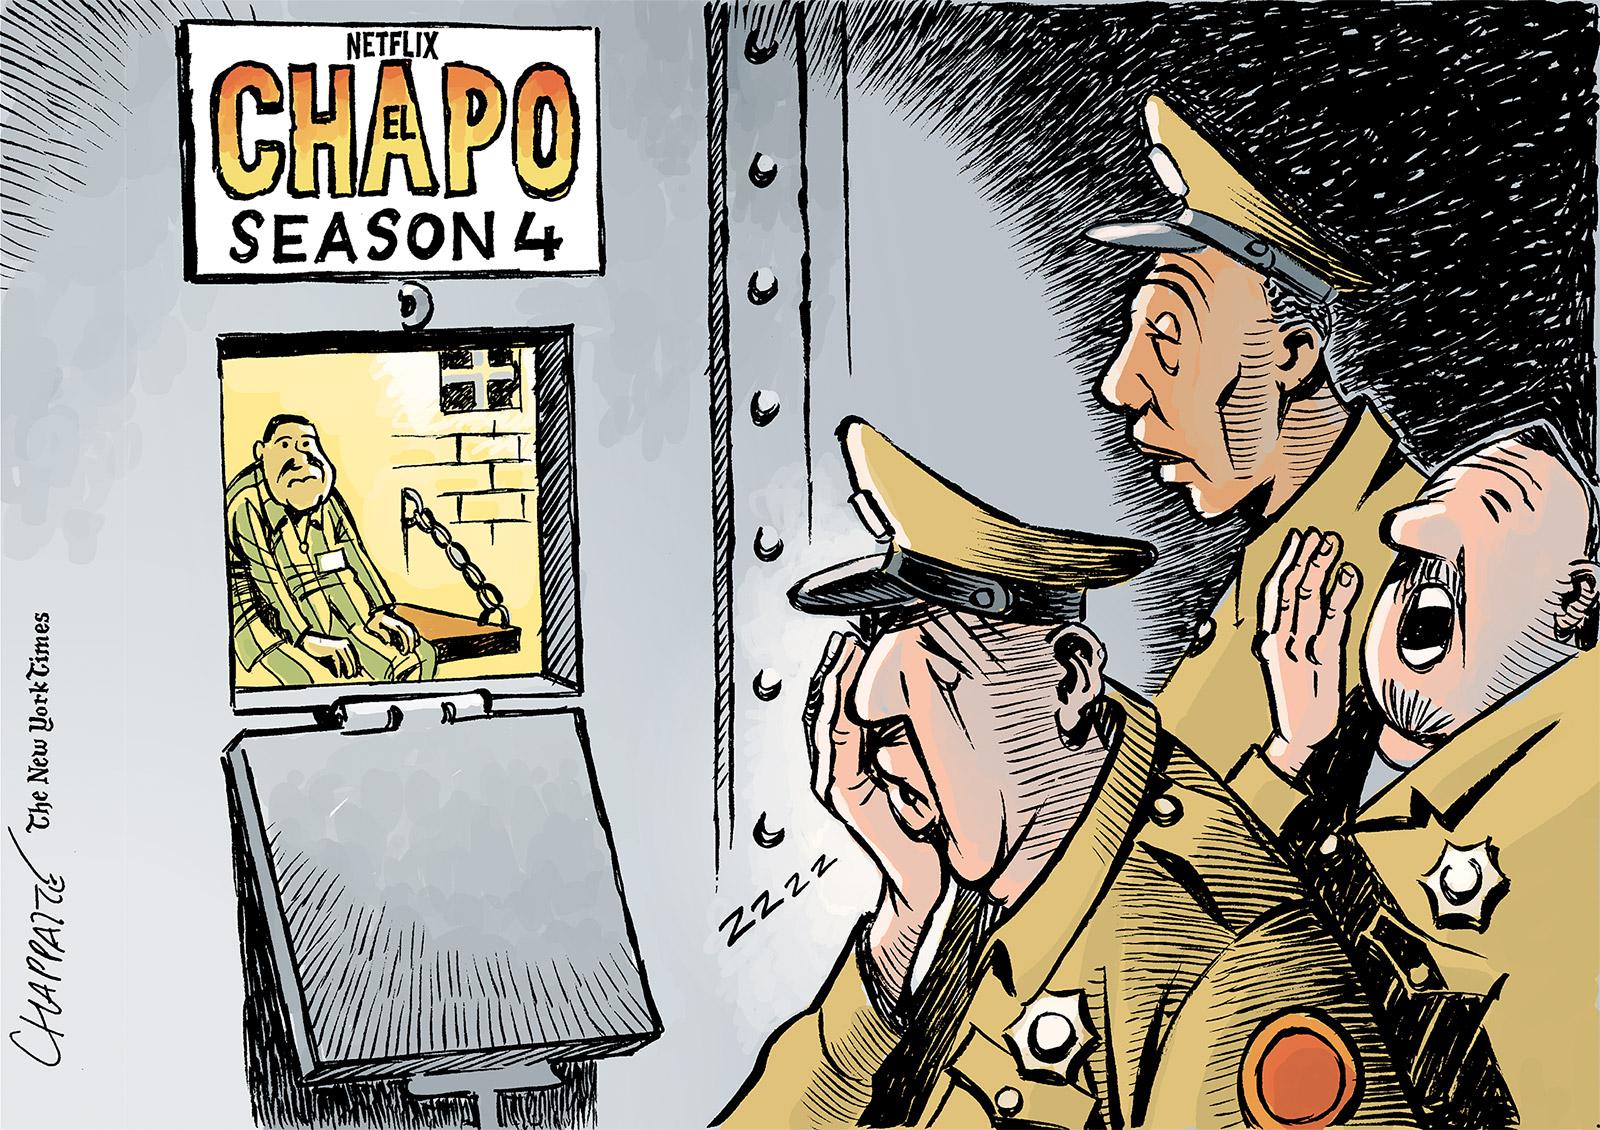 El Chapo behind bars